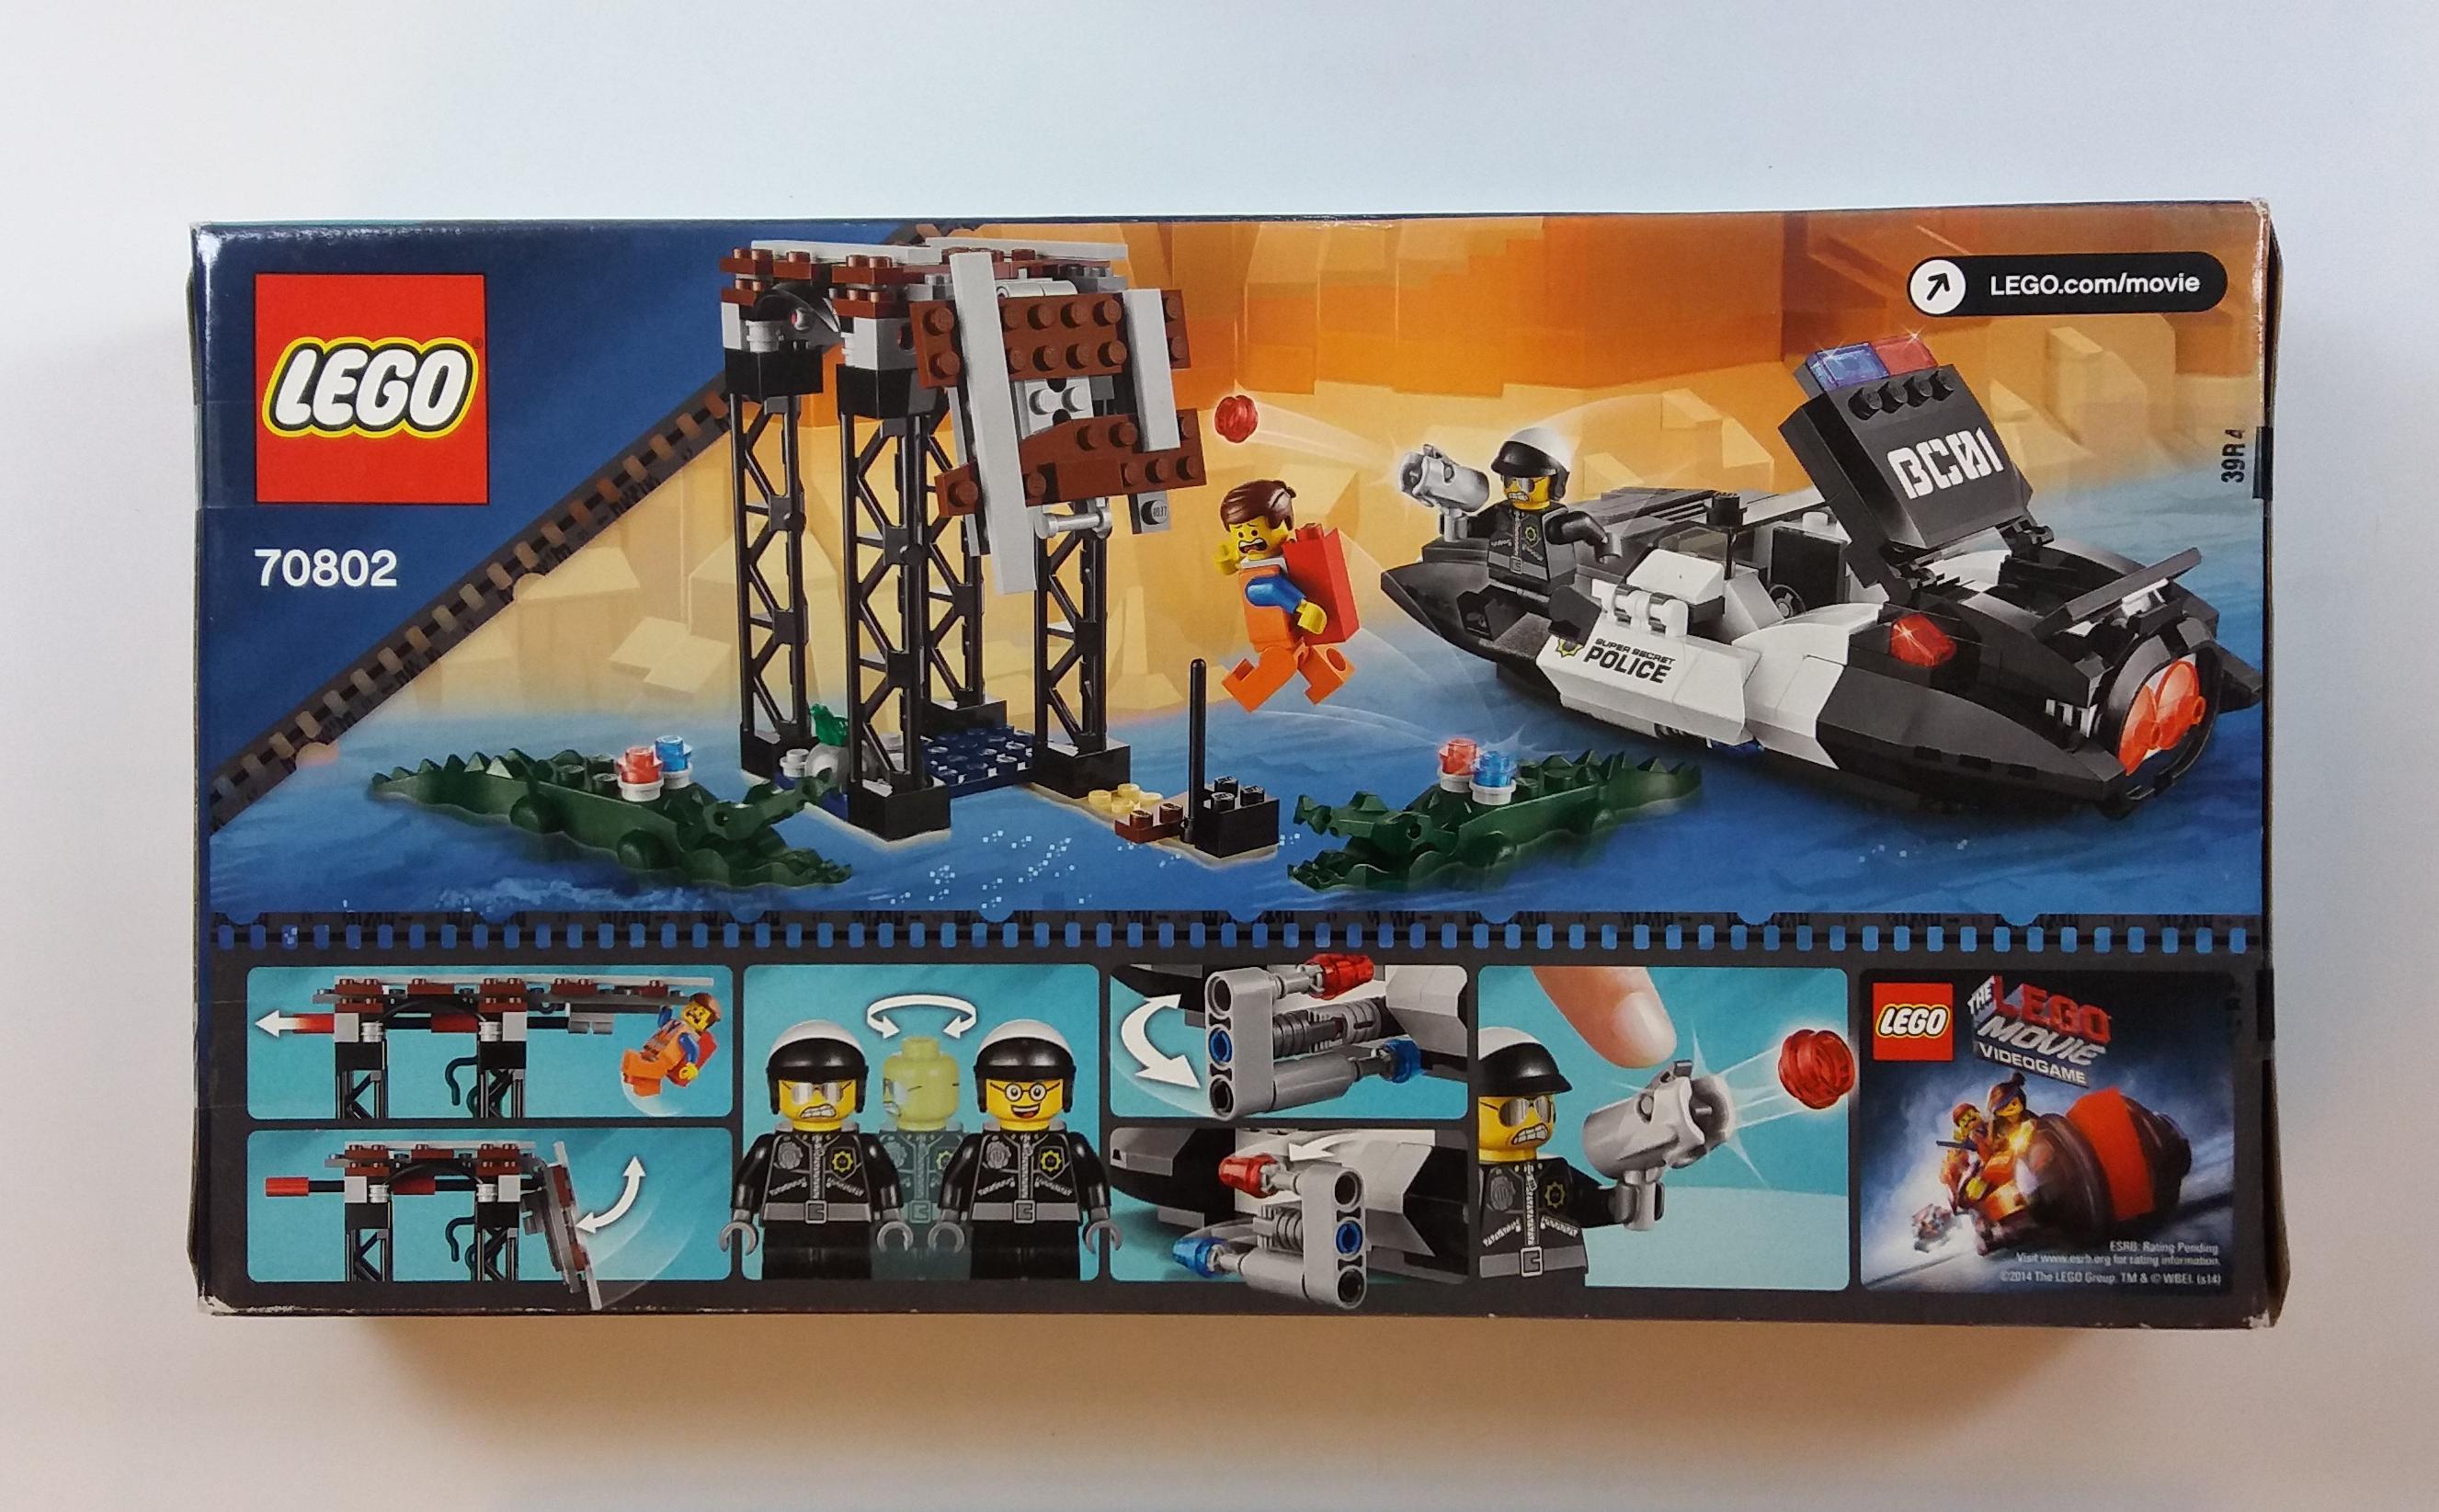 Lego 70802 Bad Cop's Pursuit 314 Piece The Lego Movie Building Block Set